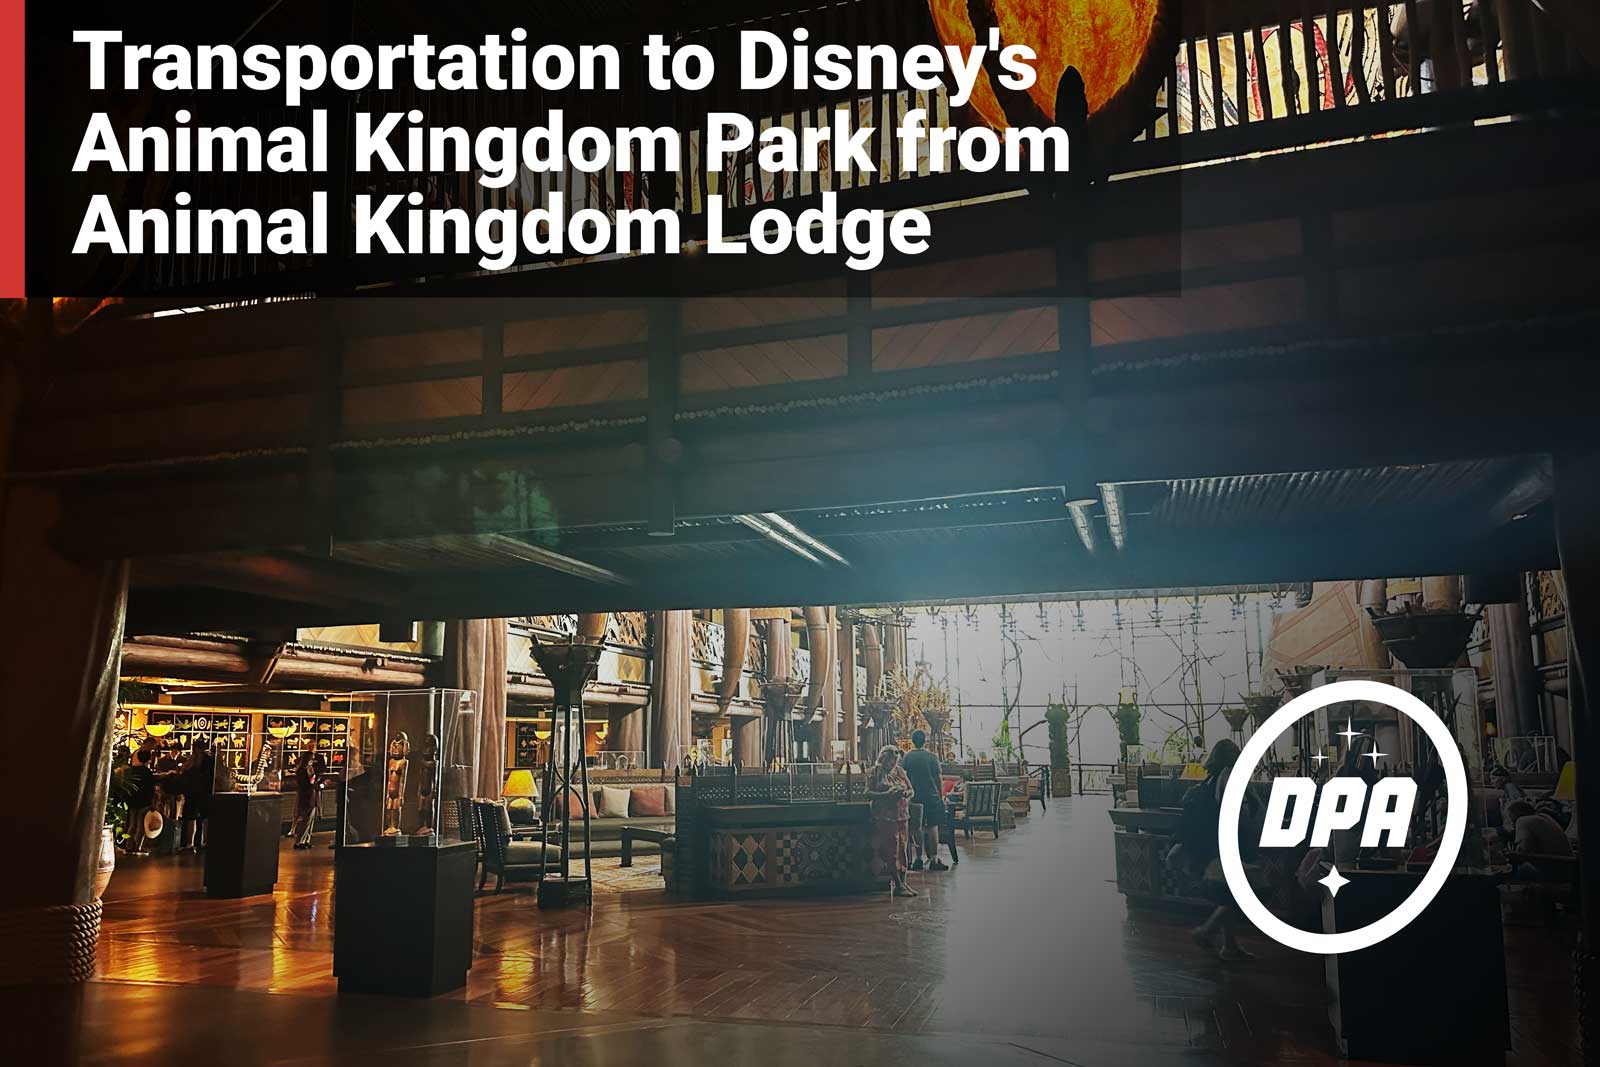 Transportation to Disney's Animal Kingdom Park from Animal Kingdom Lodge